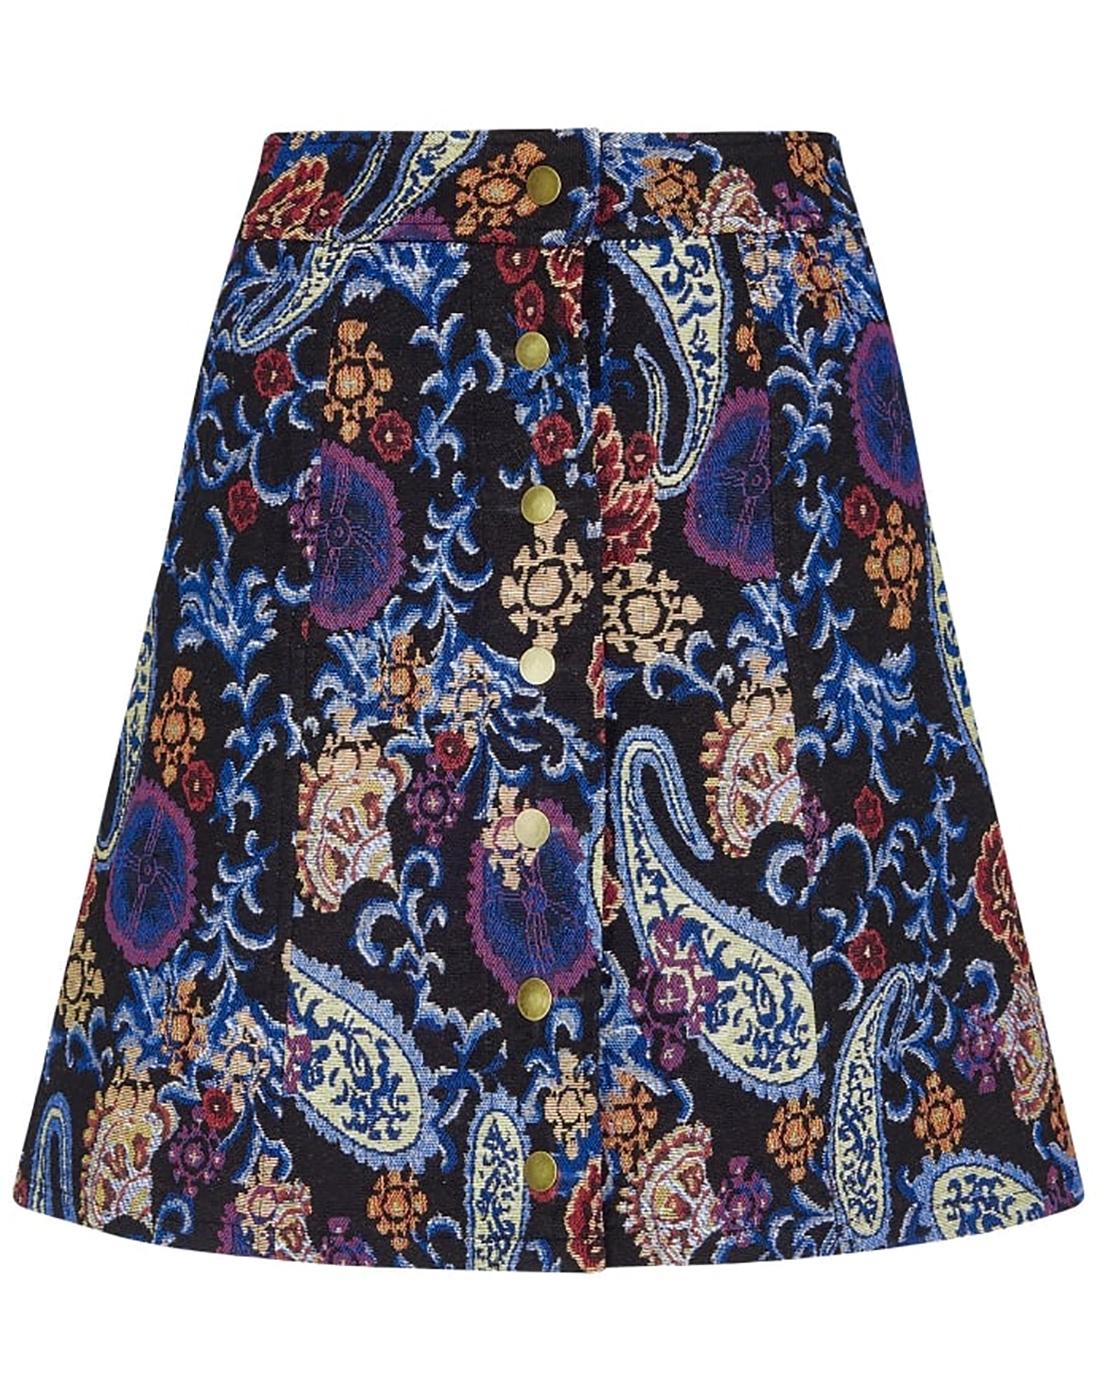 India BRIGHT & BEAUTIFUL 60s Paisley Mini Skirt